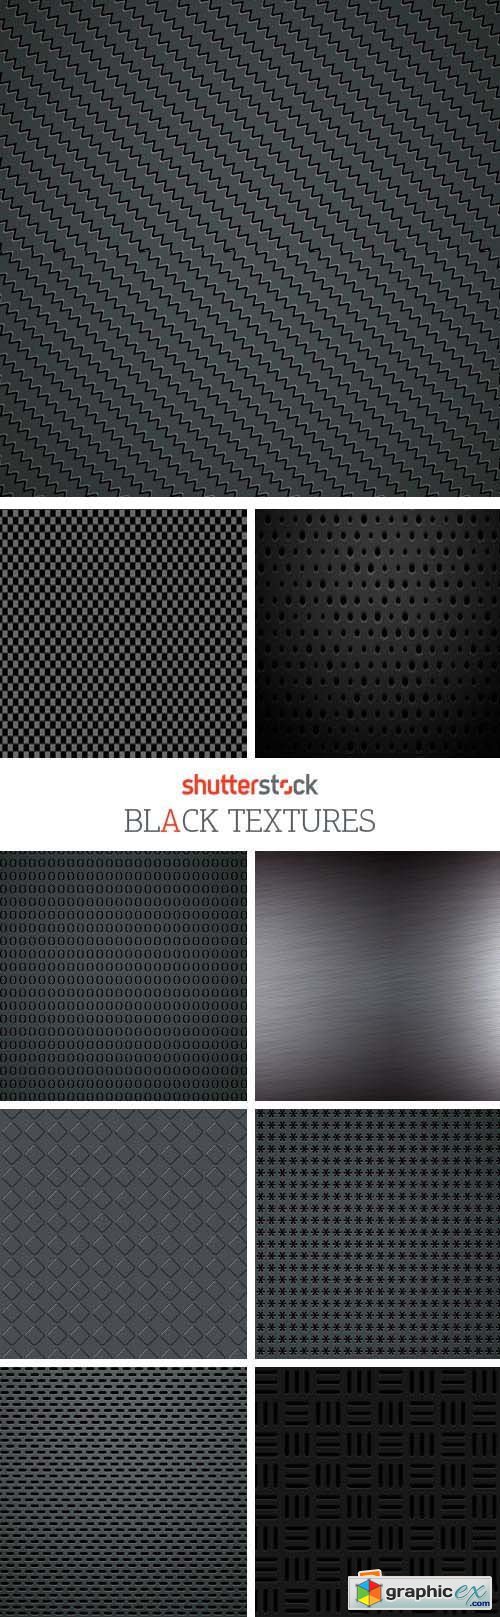 Amazing SS - Black Textures, 25xEPS